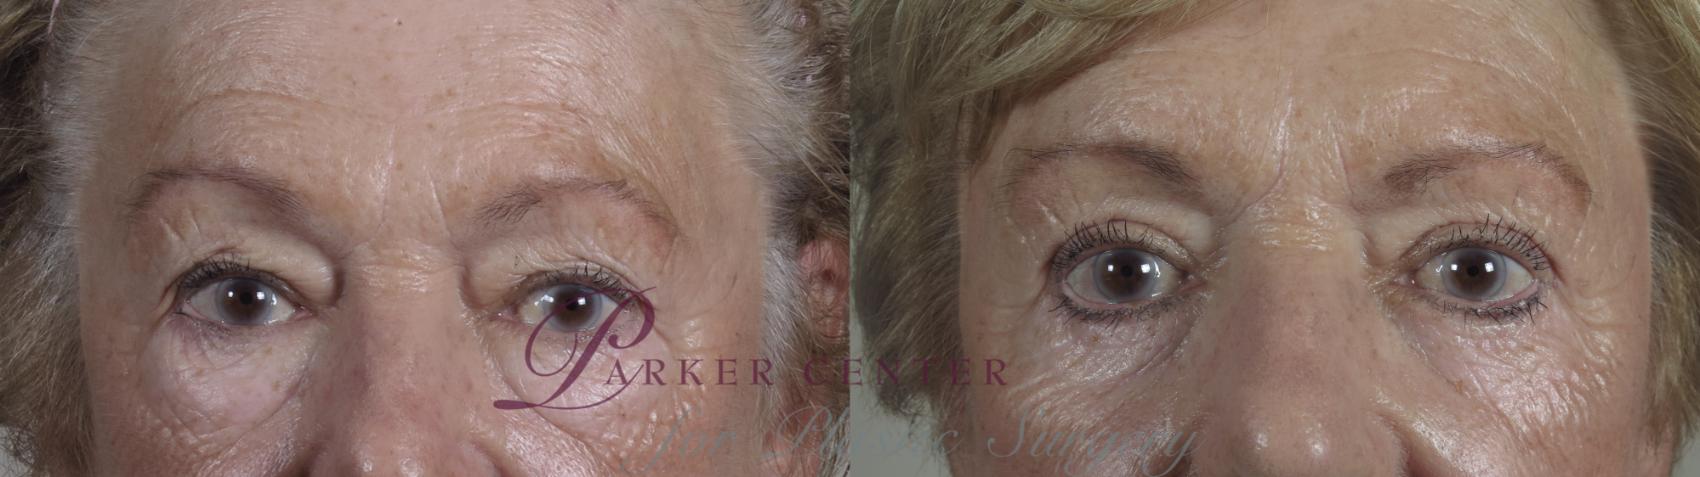 Eyelid Lift Case 1100 Before & After Front | Paramus, NJ | Parker Center for Plastic Surgery